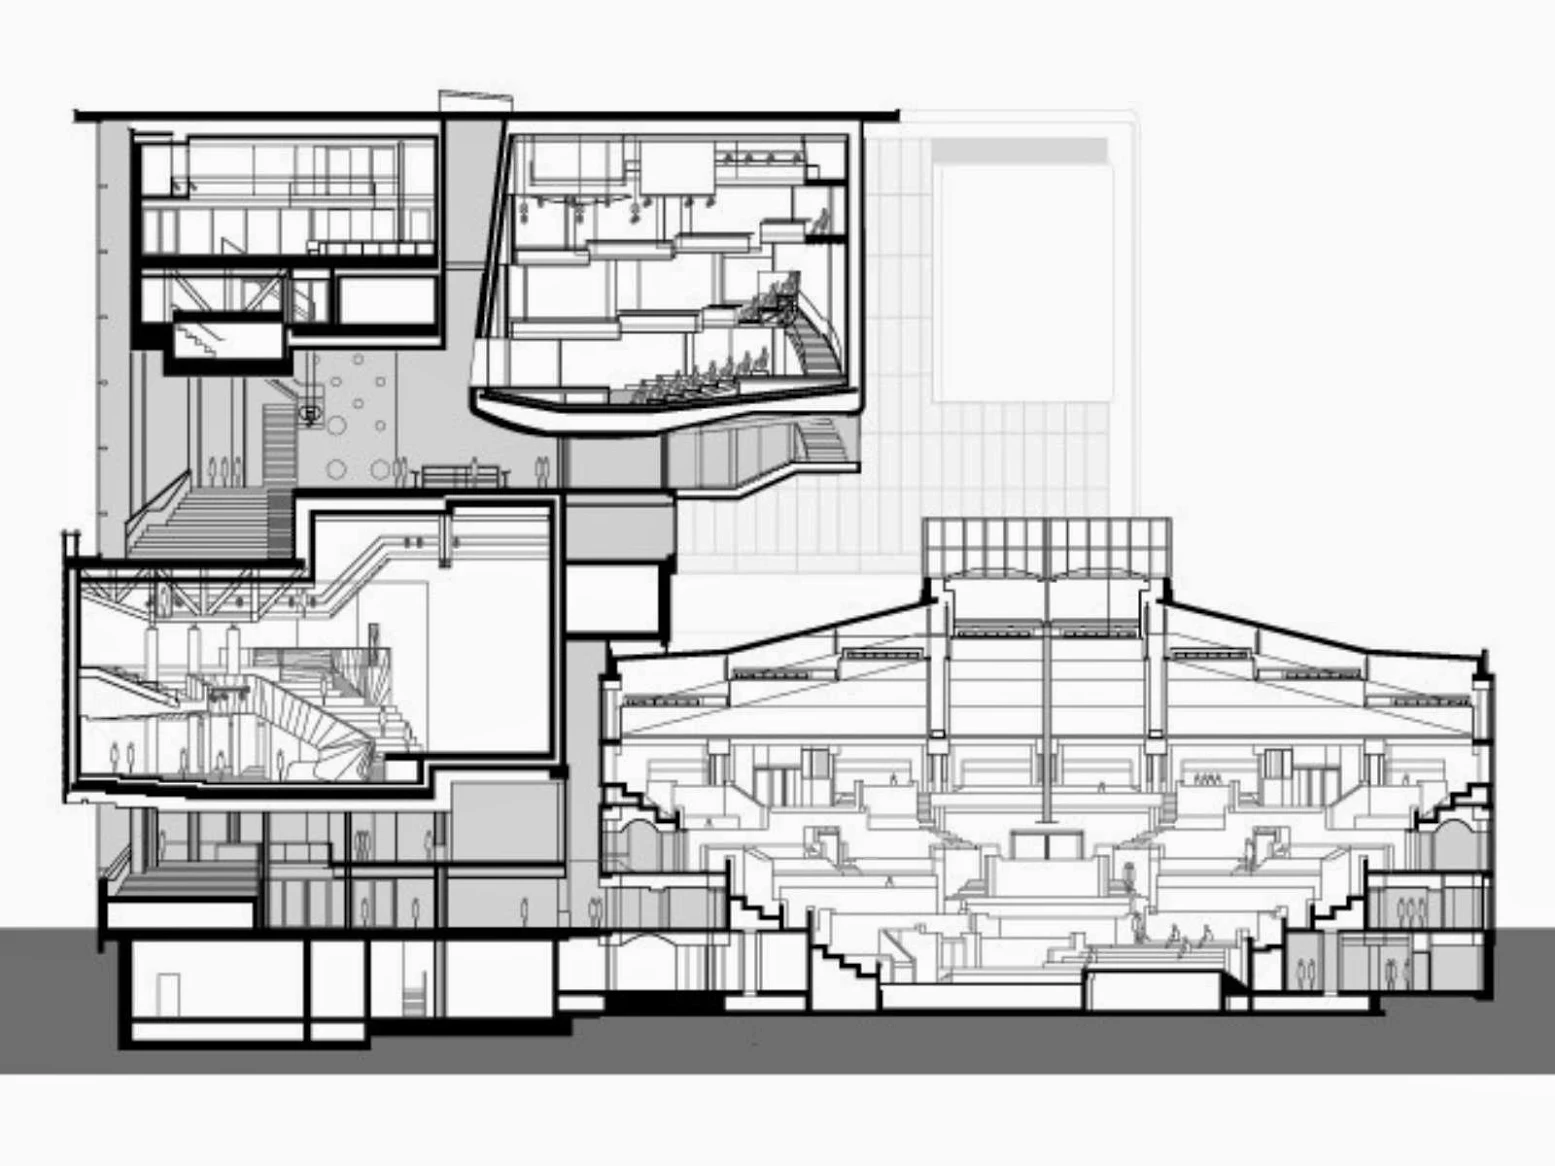 Tivoli Vredenburg by Architectuurstudio HH